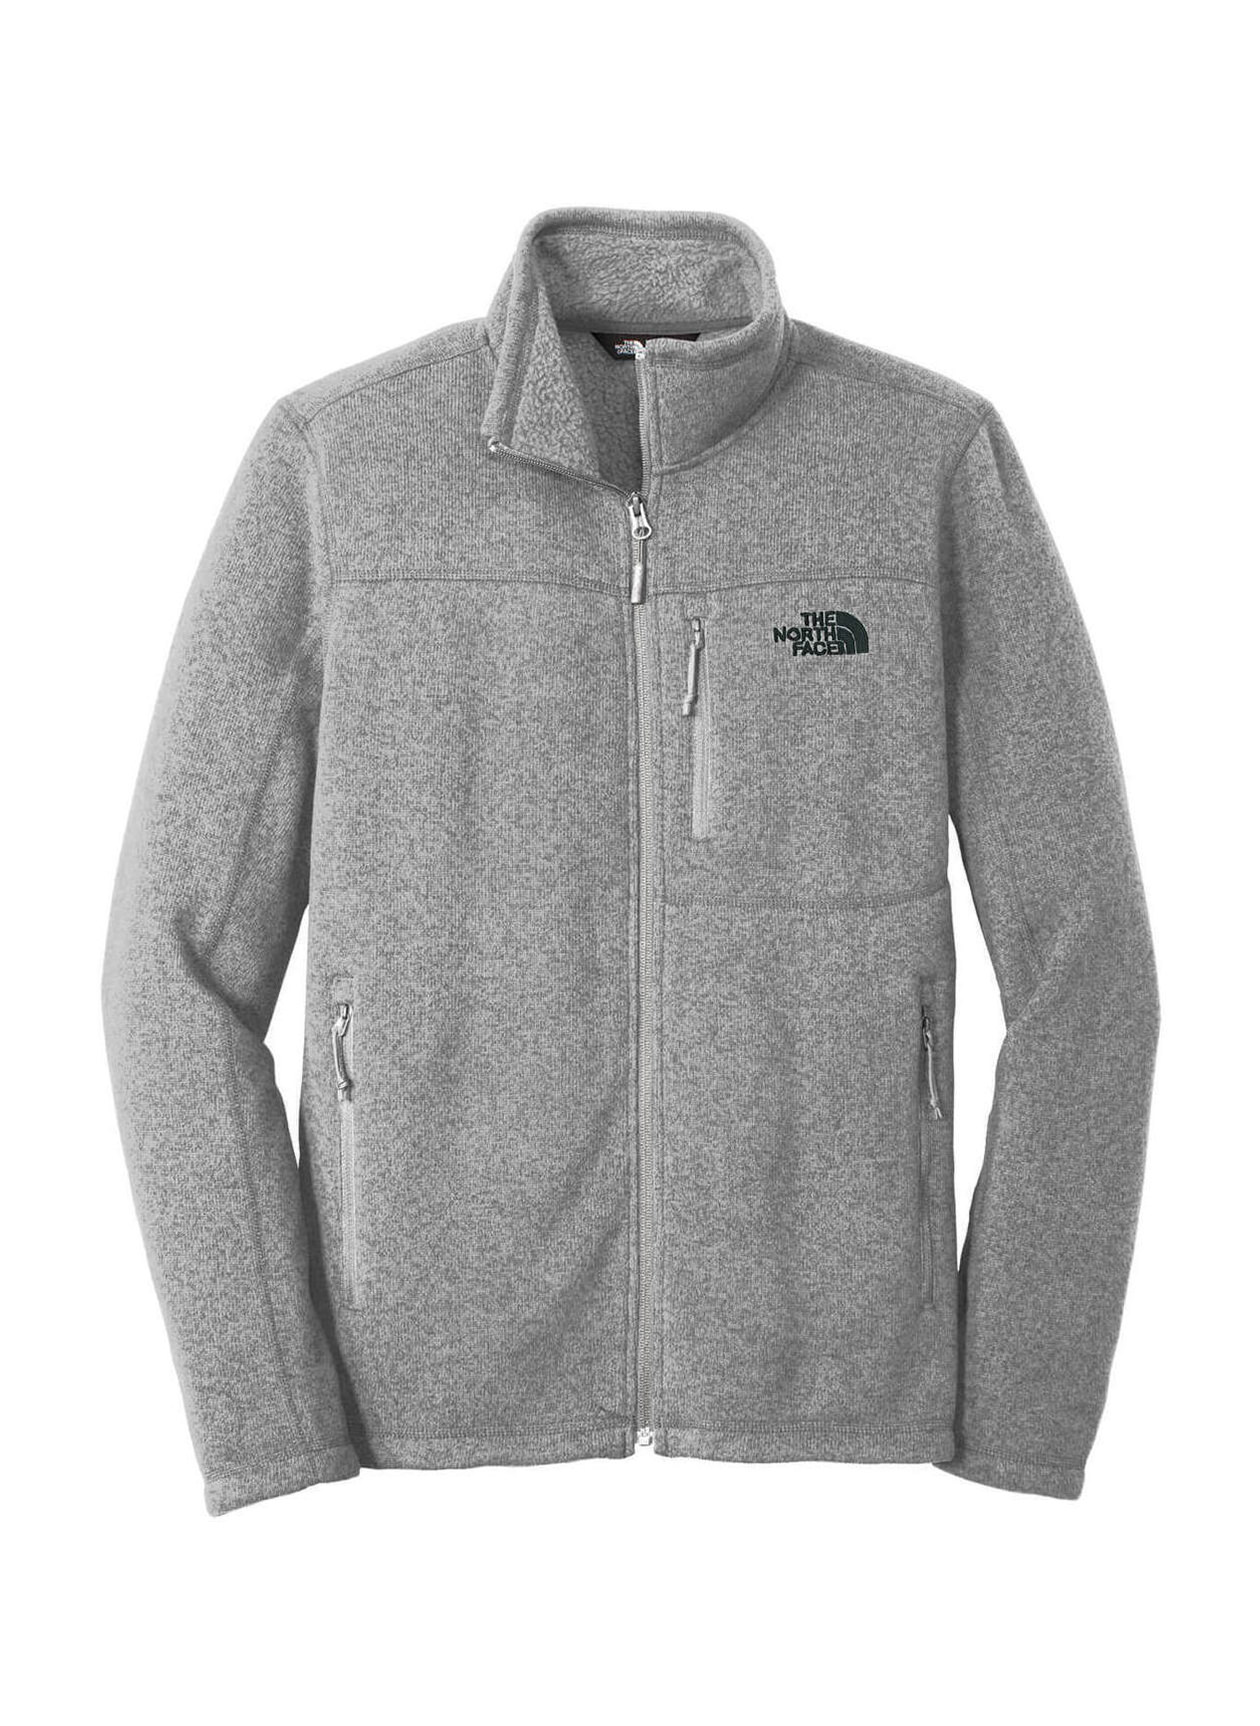 Customized The North Face Men's Medium Grey Heather Sweater Fleece ...